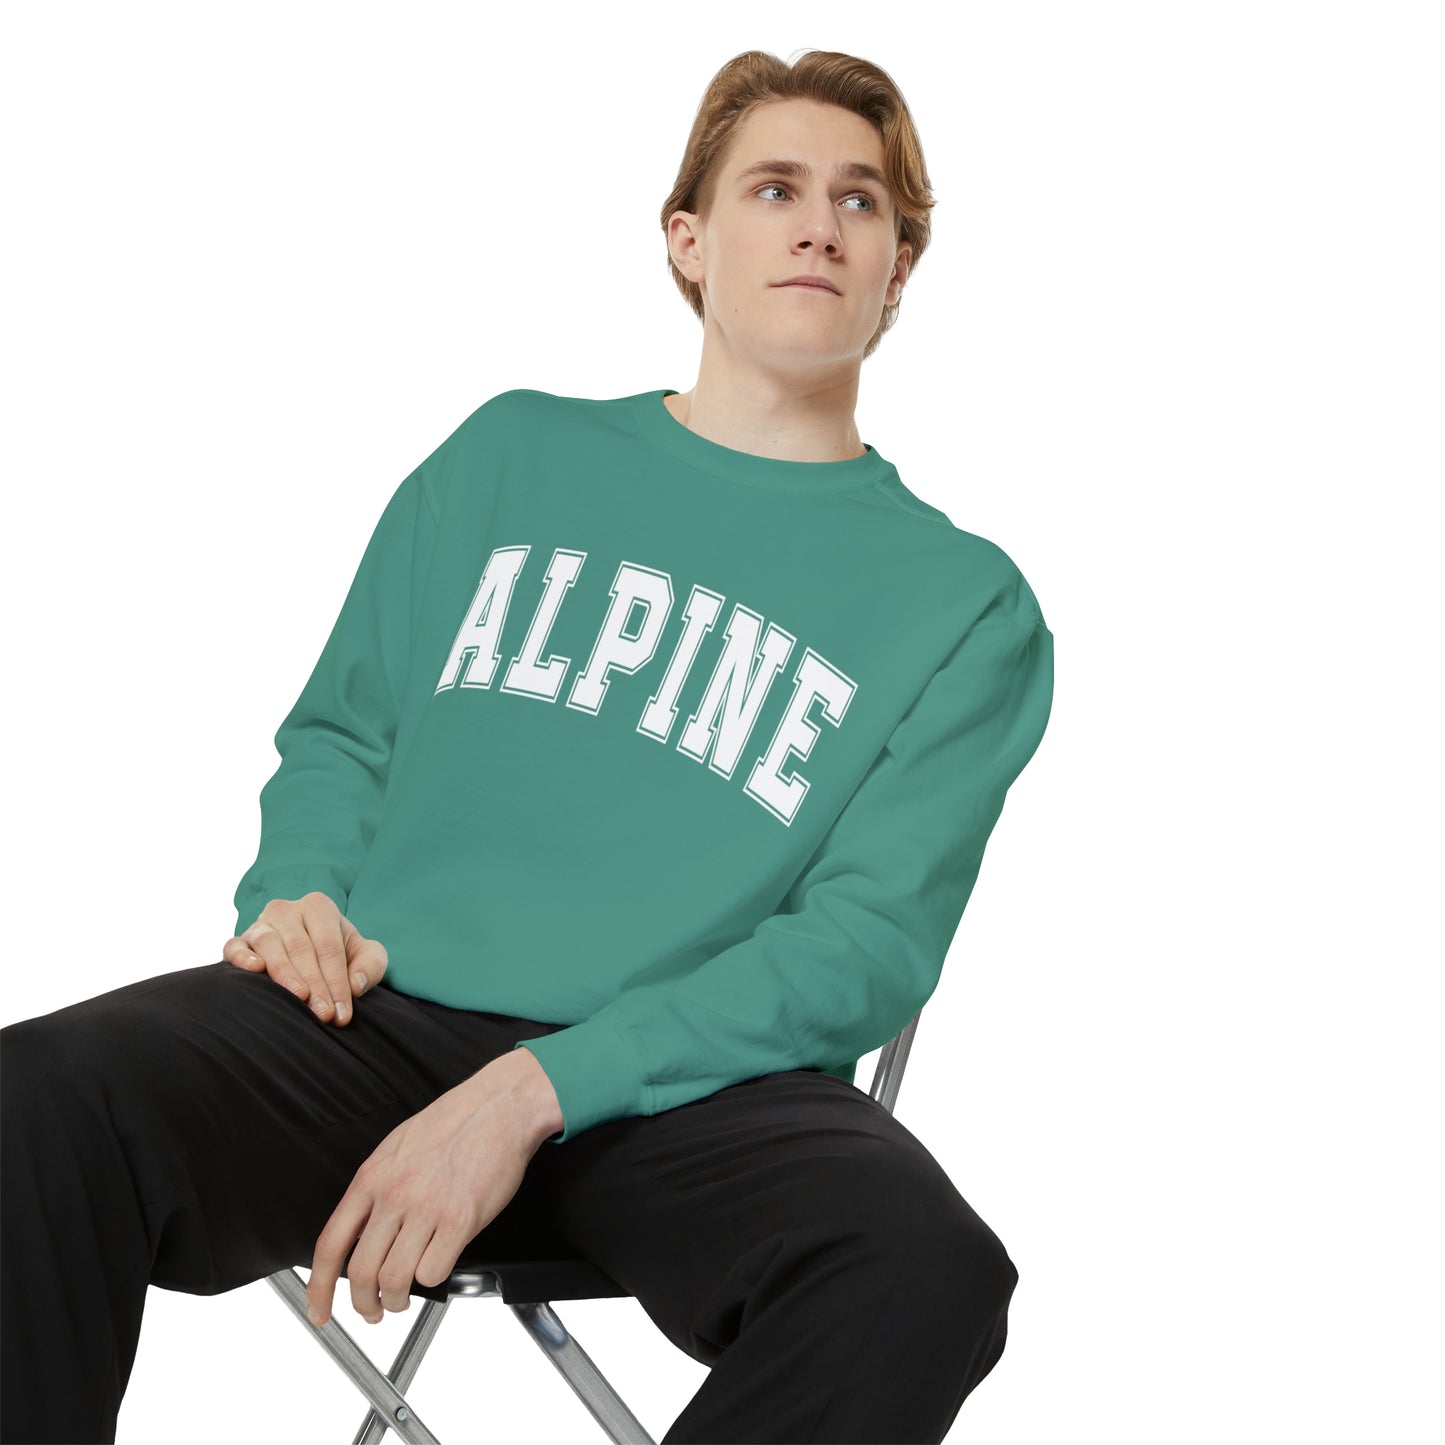 Alpine Crewneck Comfort Colors